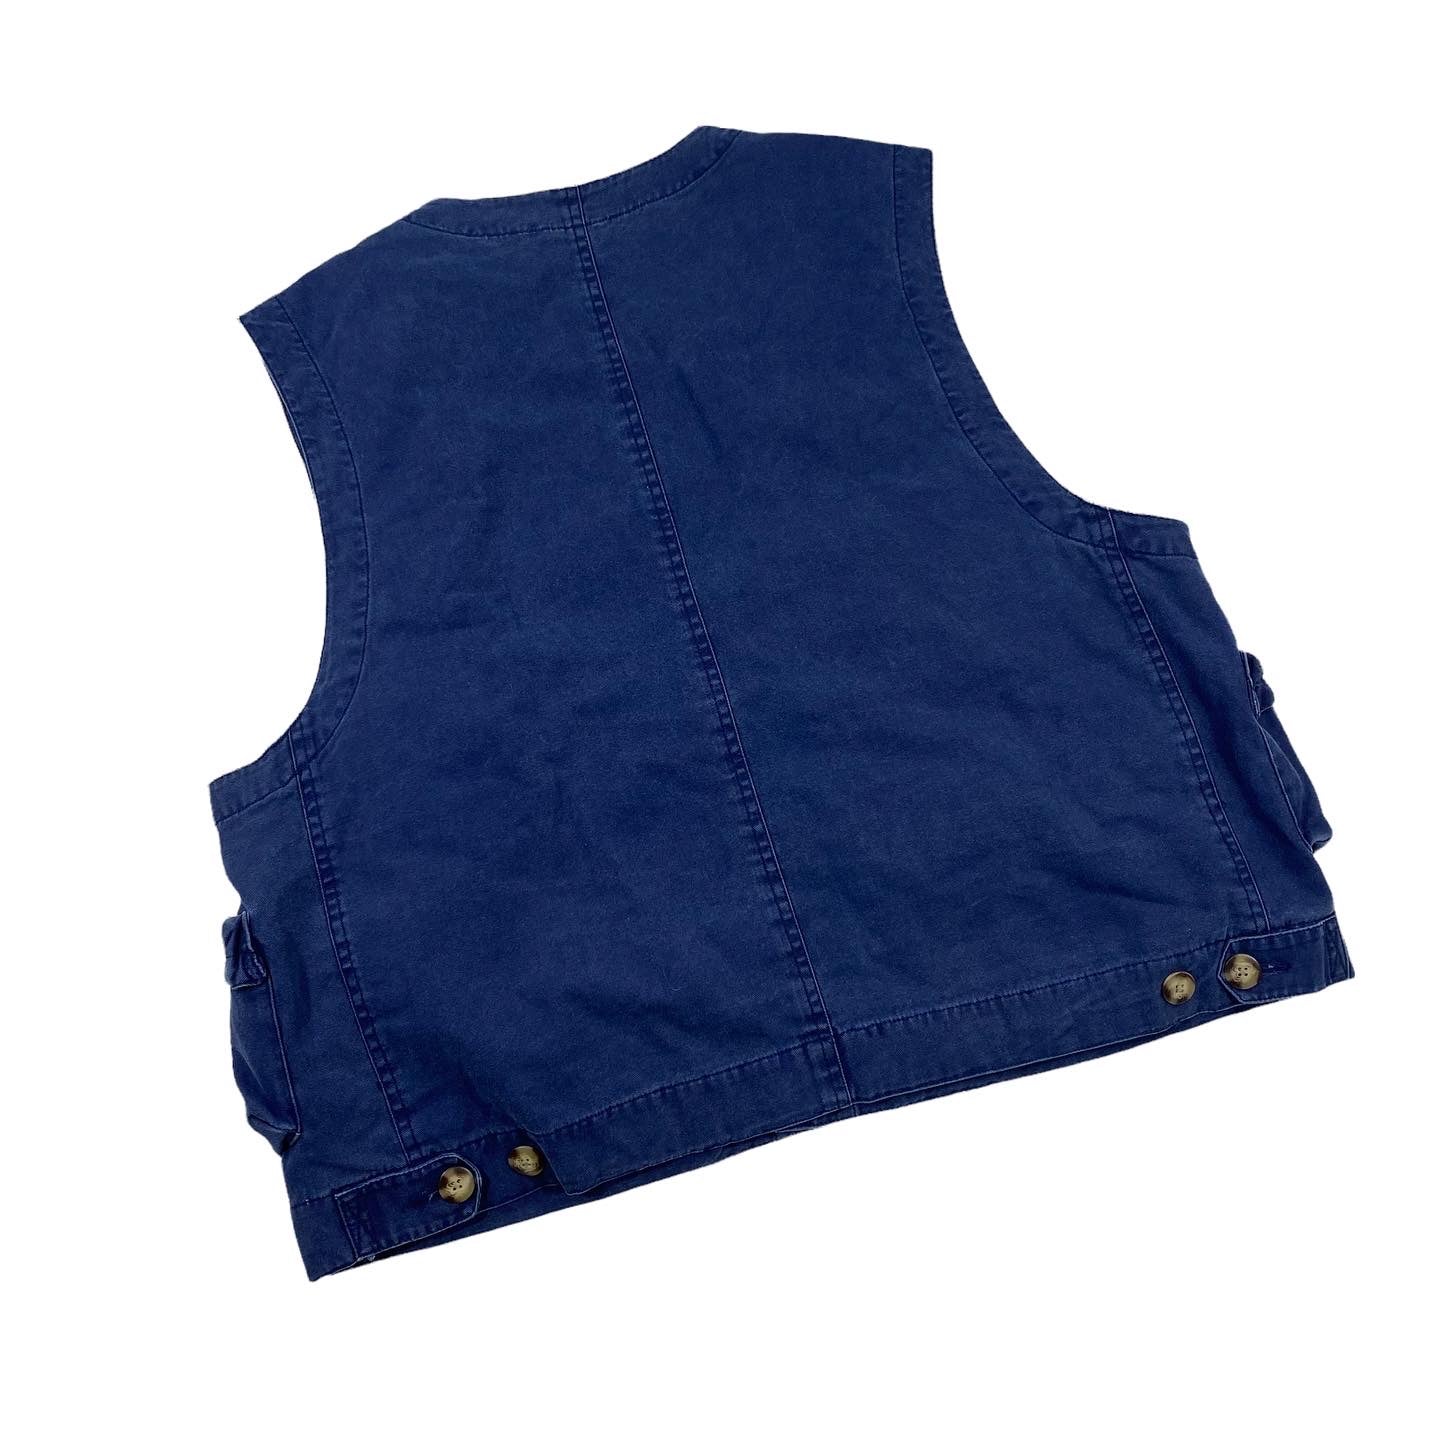 Abercrombie & fitch cargo vest XL